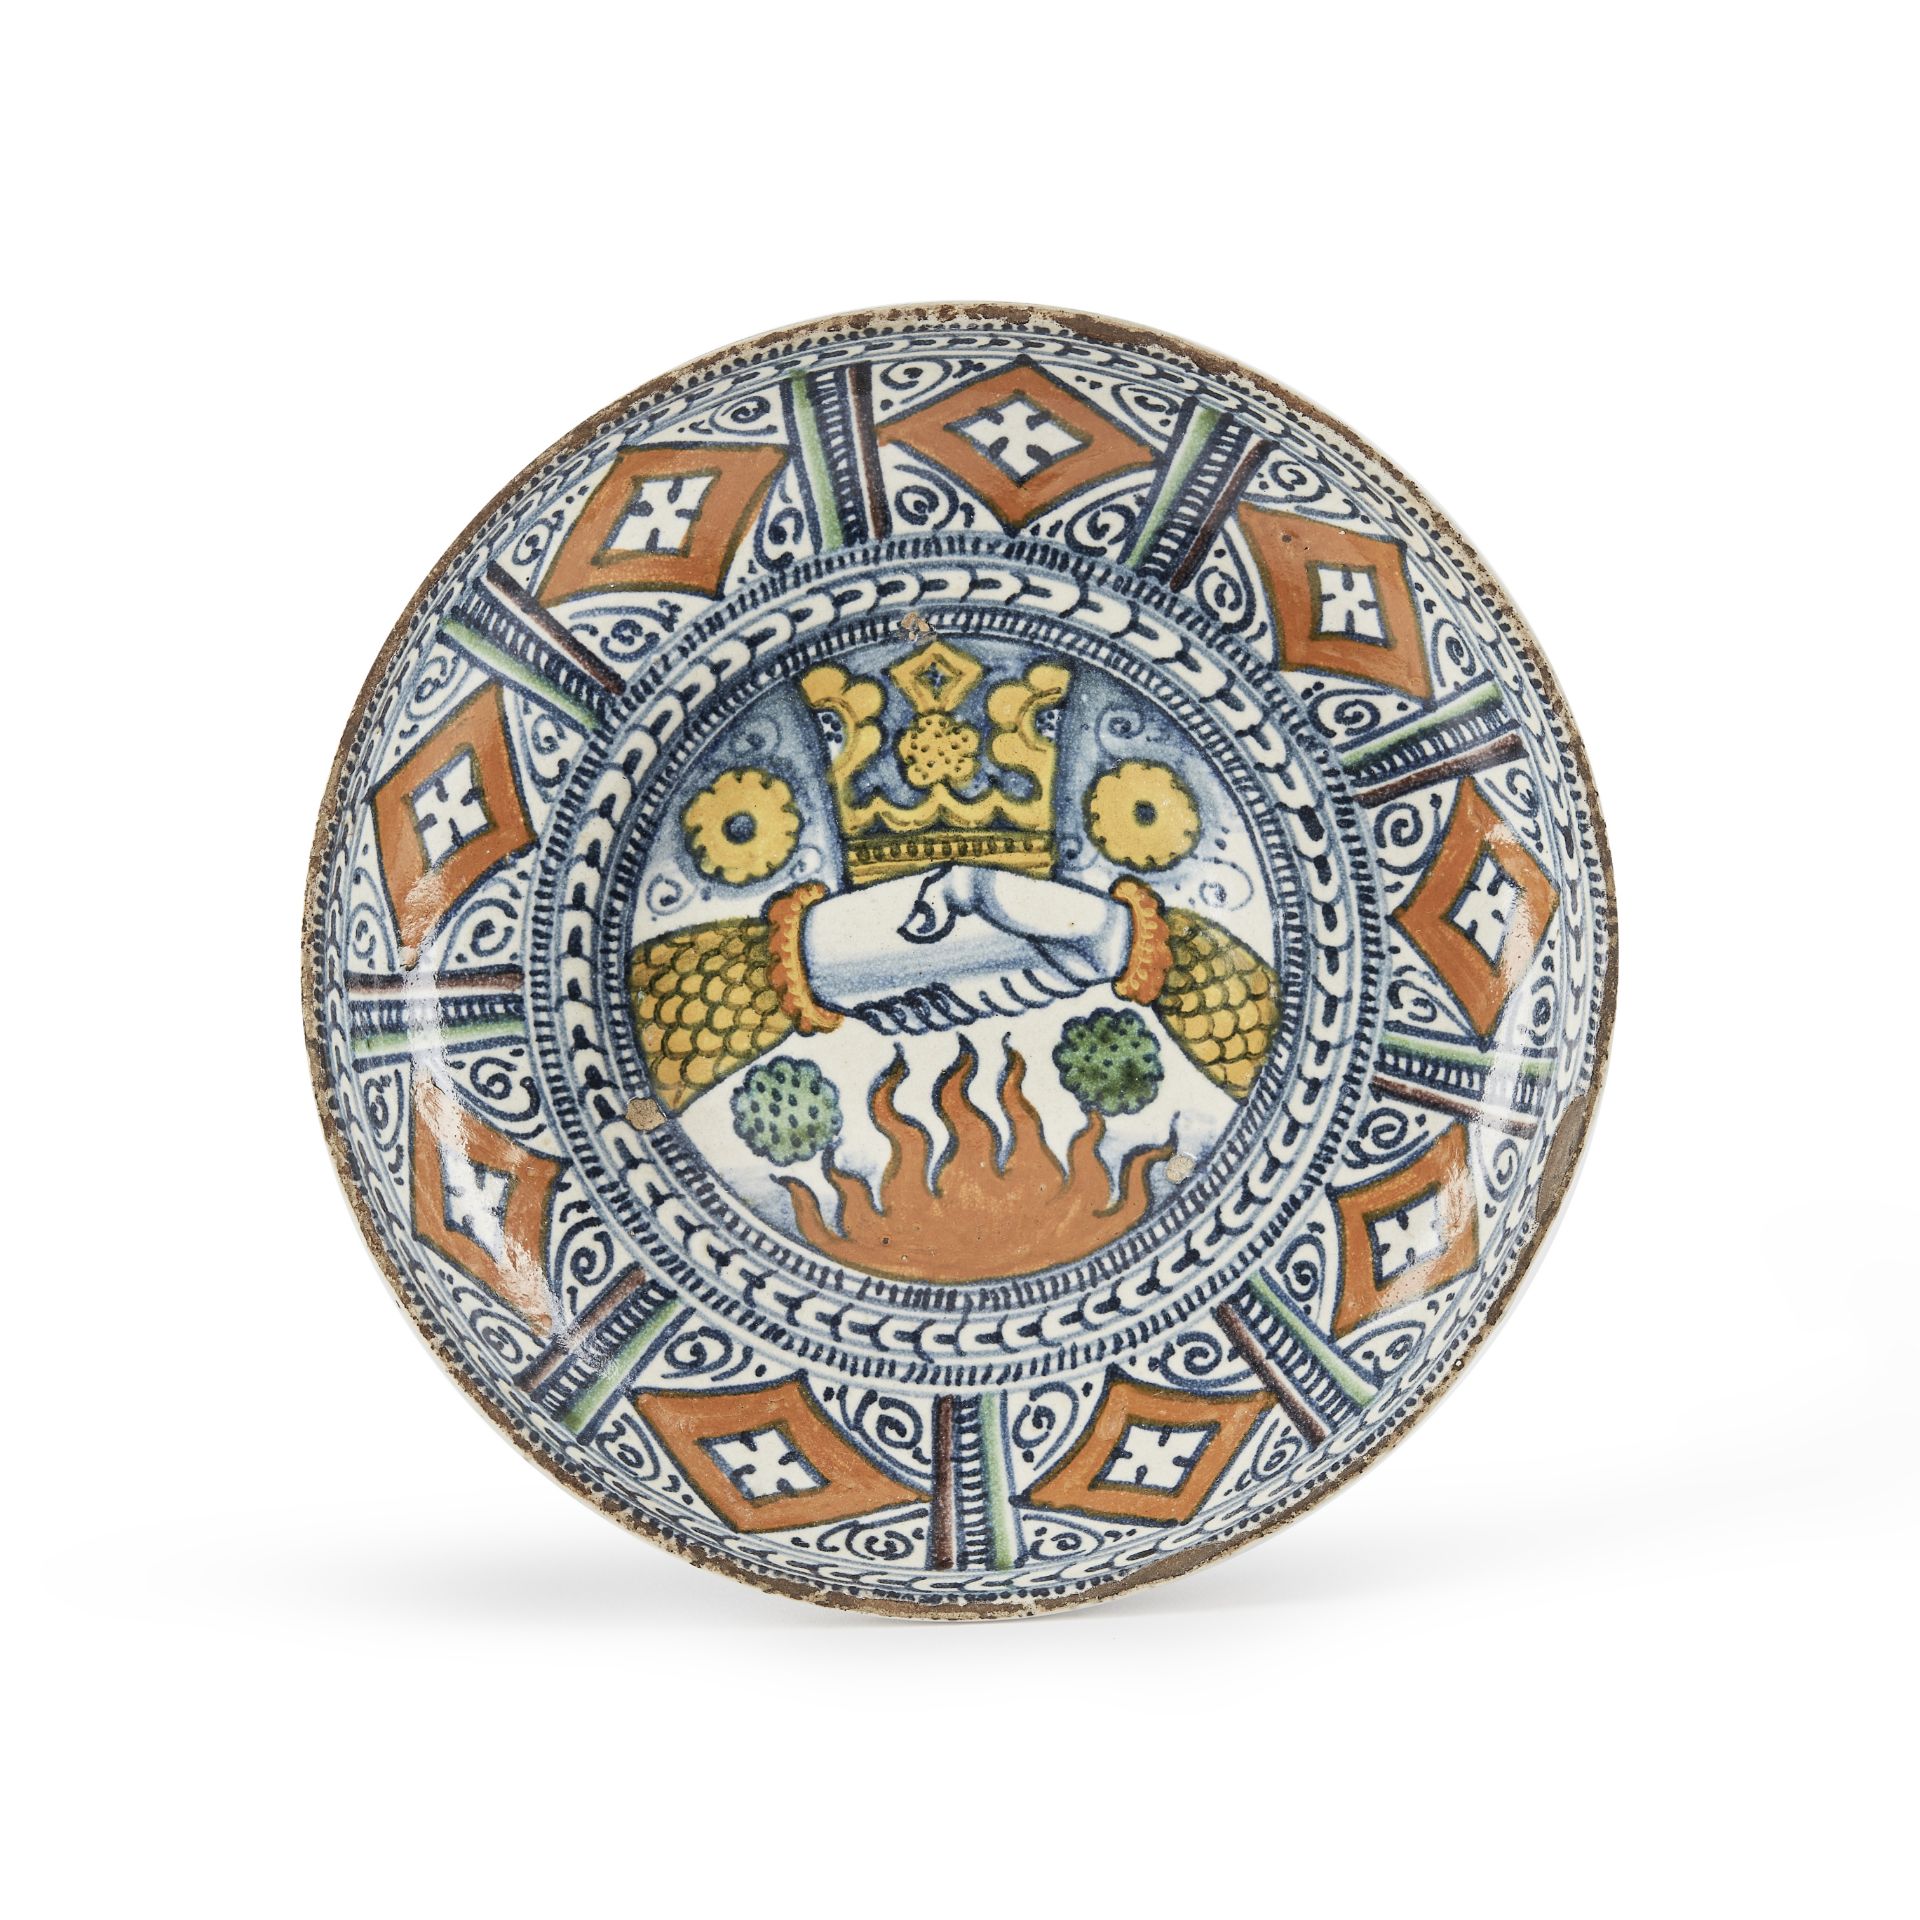 Tondino en majolique de Deruta, vers 1500-1520 A Deruta flat tondino dish, circa 1500-1520